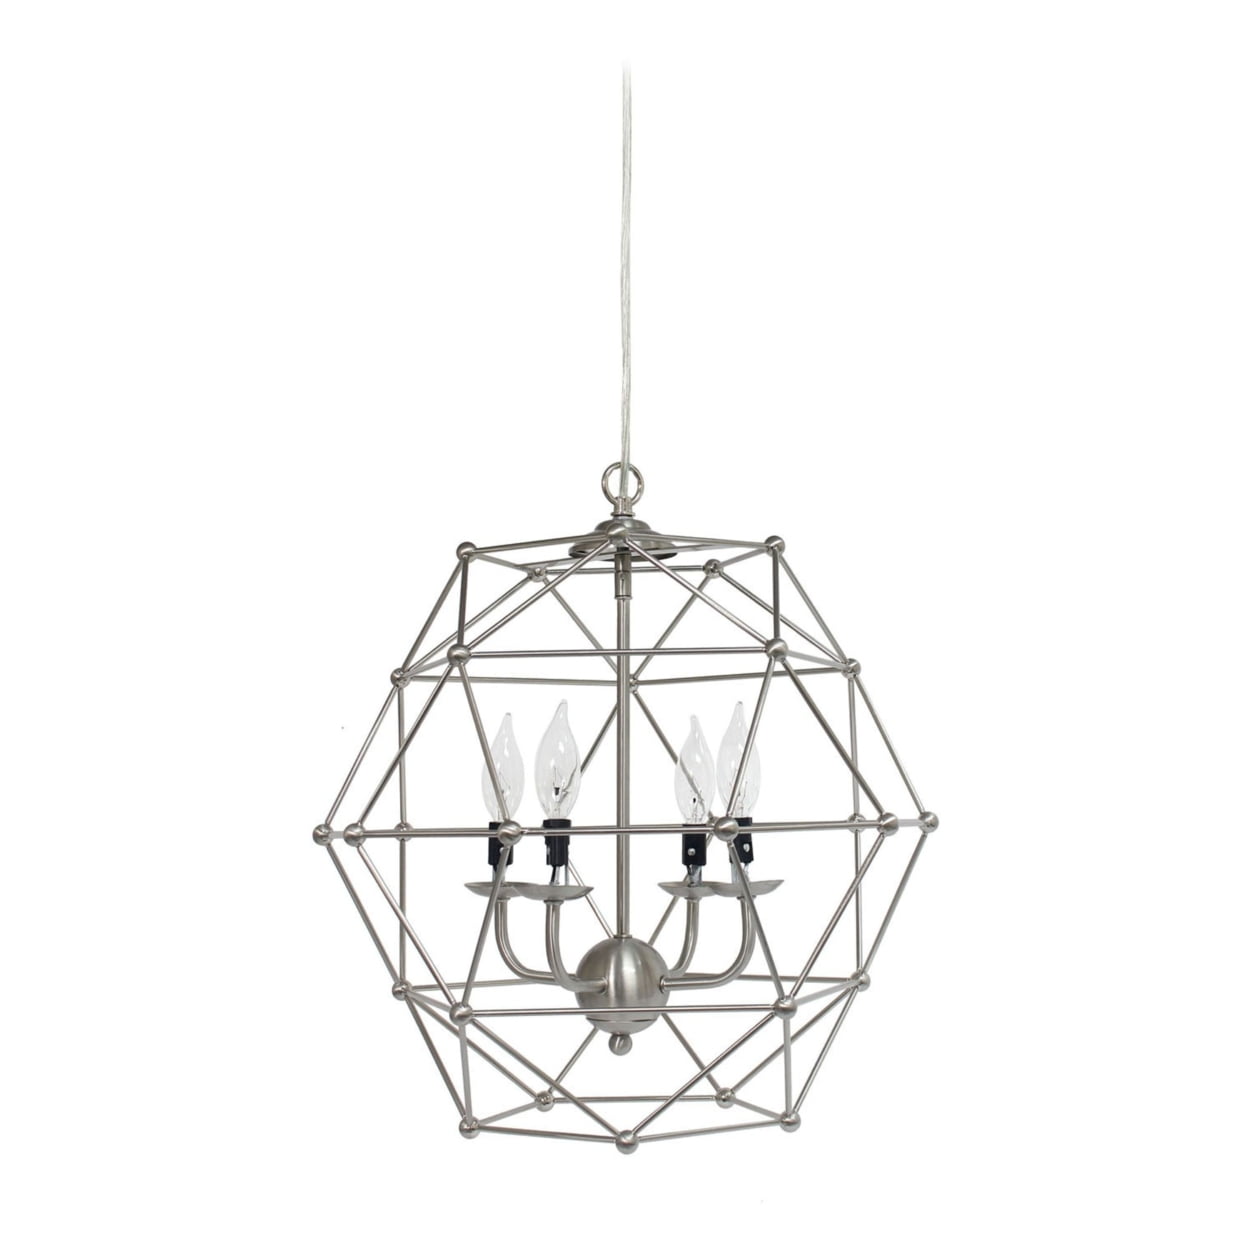 Elegant Designs Pt1005-bsn 4 Light Hexagon Industrial Rustic Pendant Light, Brushed Nickel